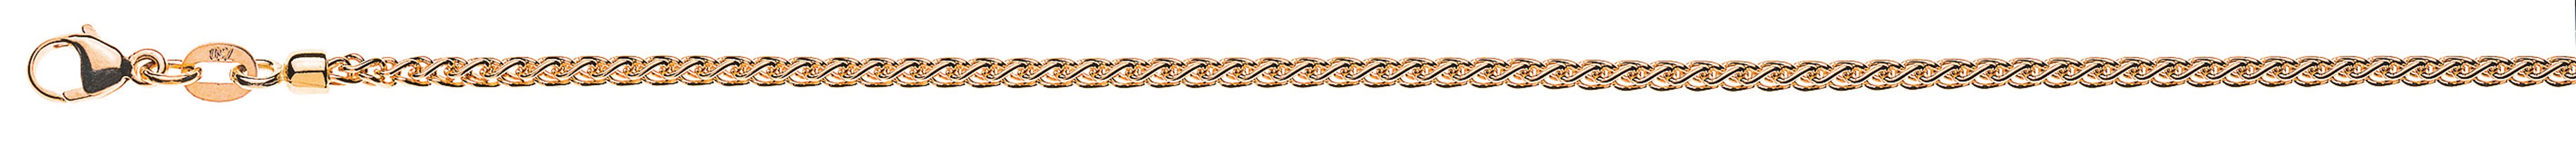 AURONOS Prestige Halskette Roségold 18K Zopfkette 55cm 2.15mm